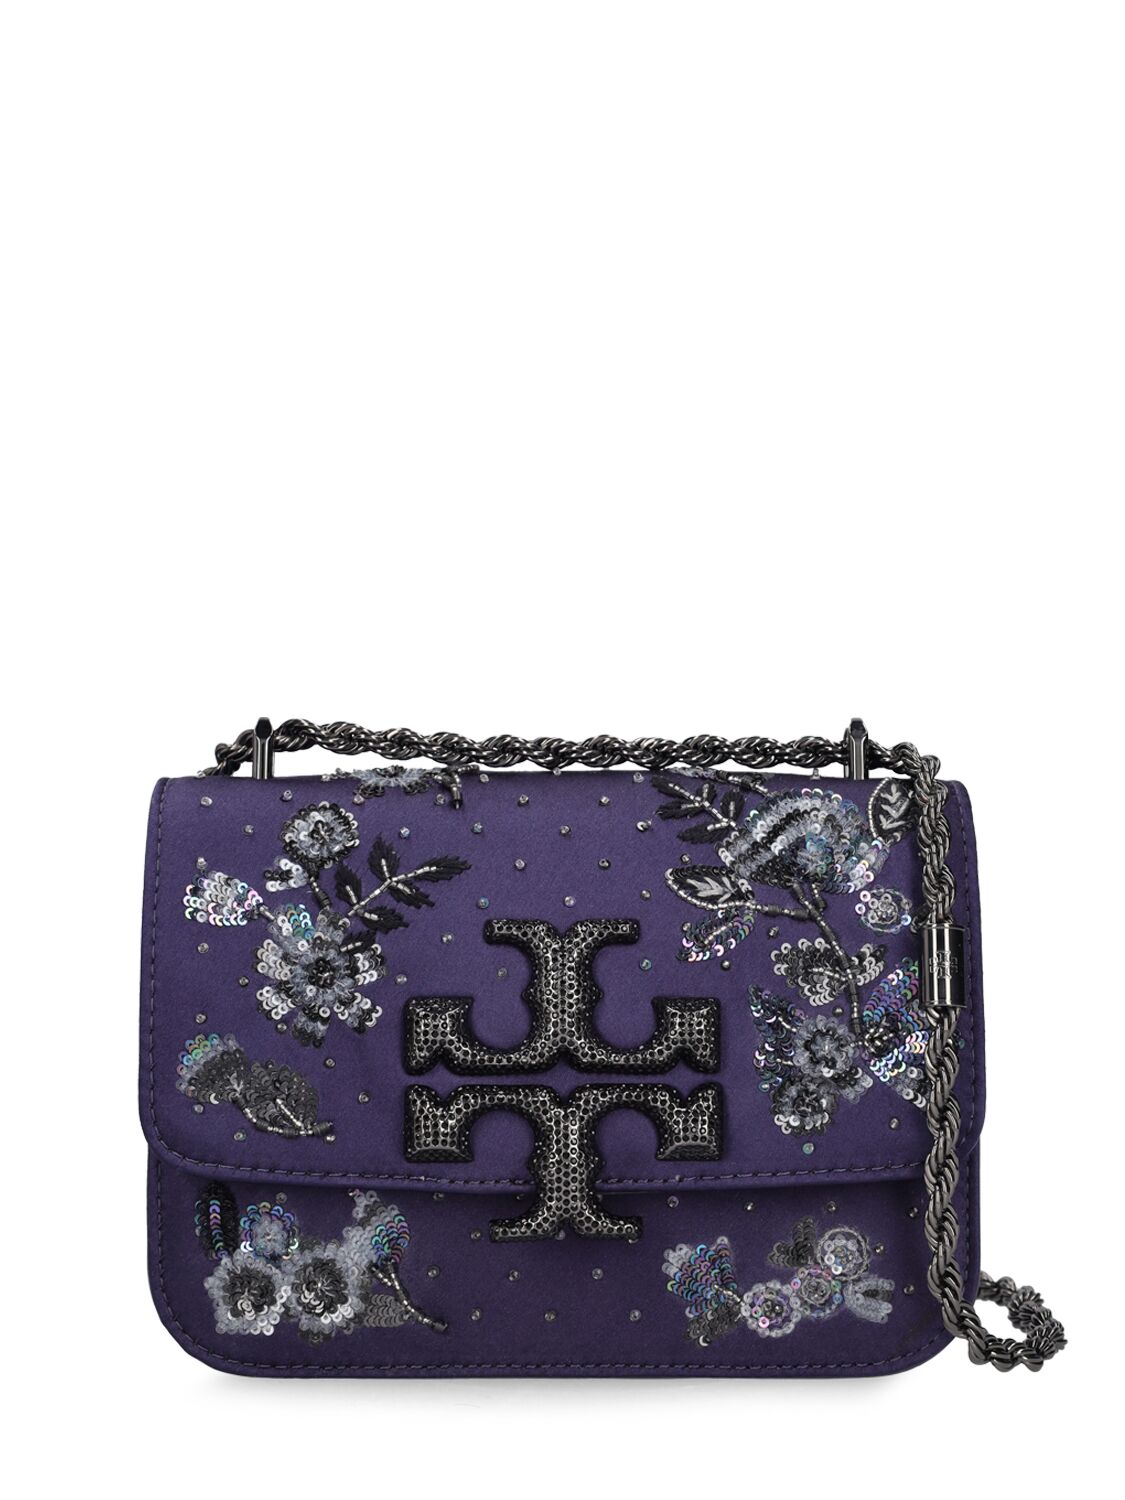 Image of Small Eleanor Embellished Bag